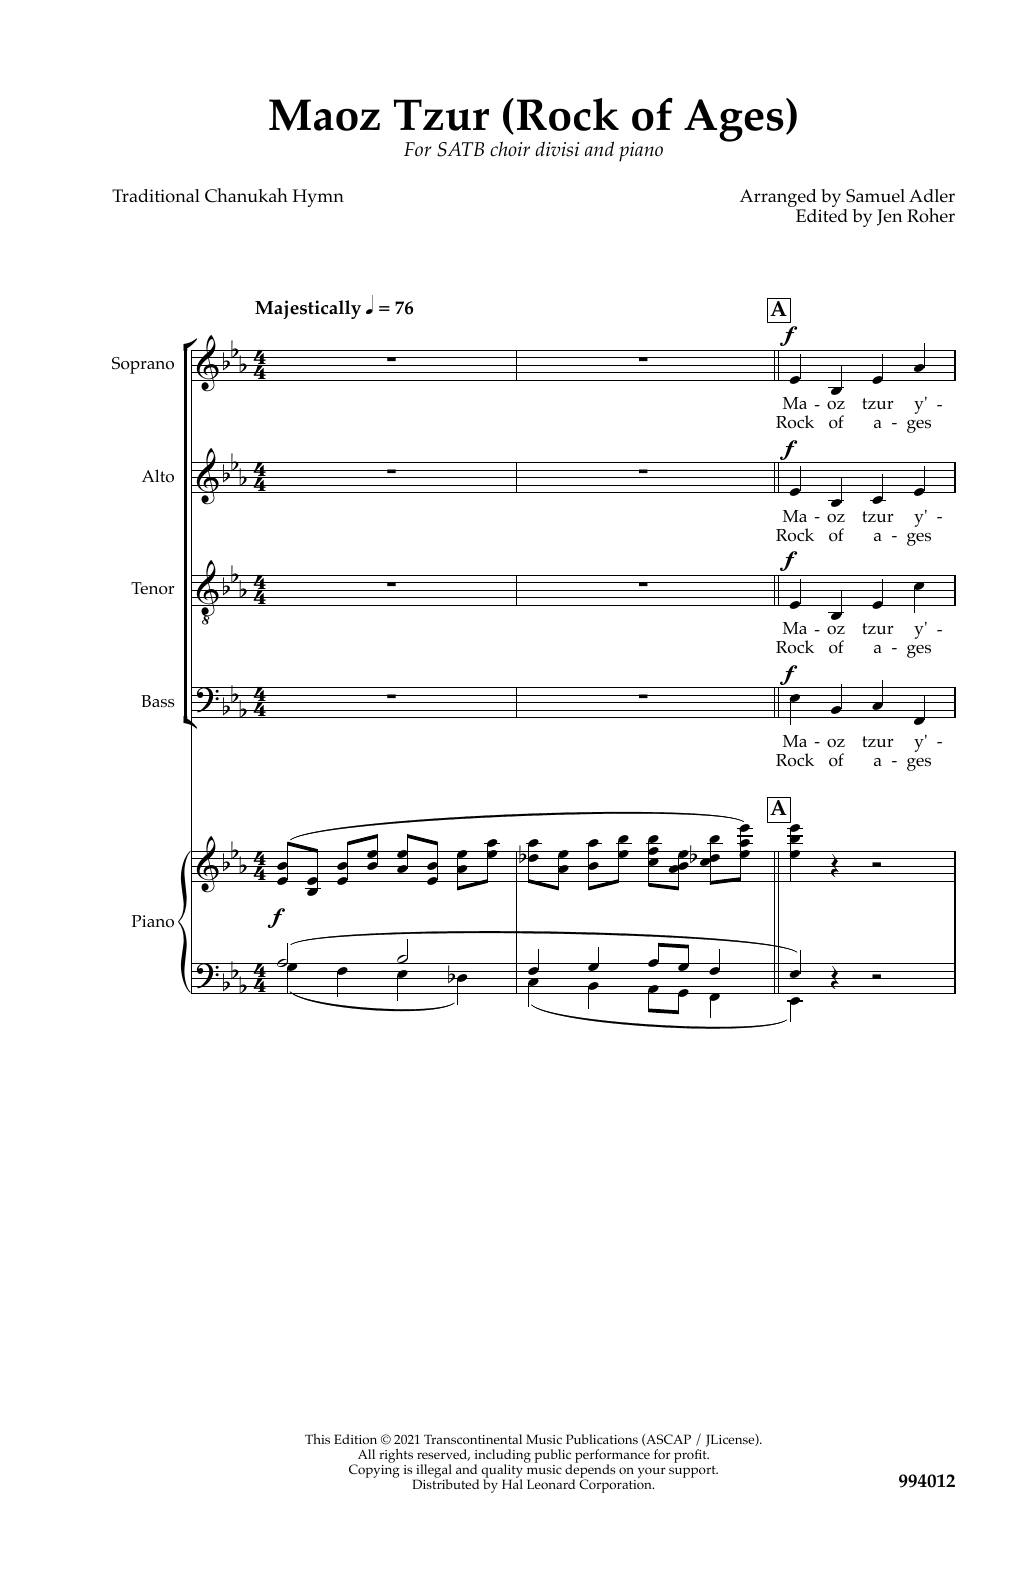 Traditional Chanukah Hymn Maoz Tzur (Rock Of Ages) (arr. Samuel Adler) Sheet Music Notes & Chords for SATB Choir - Download or Print PDF